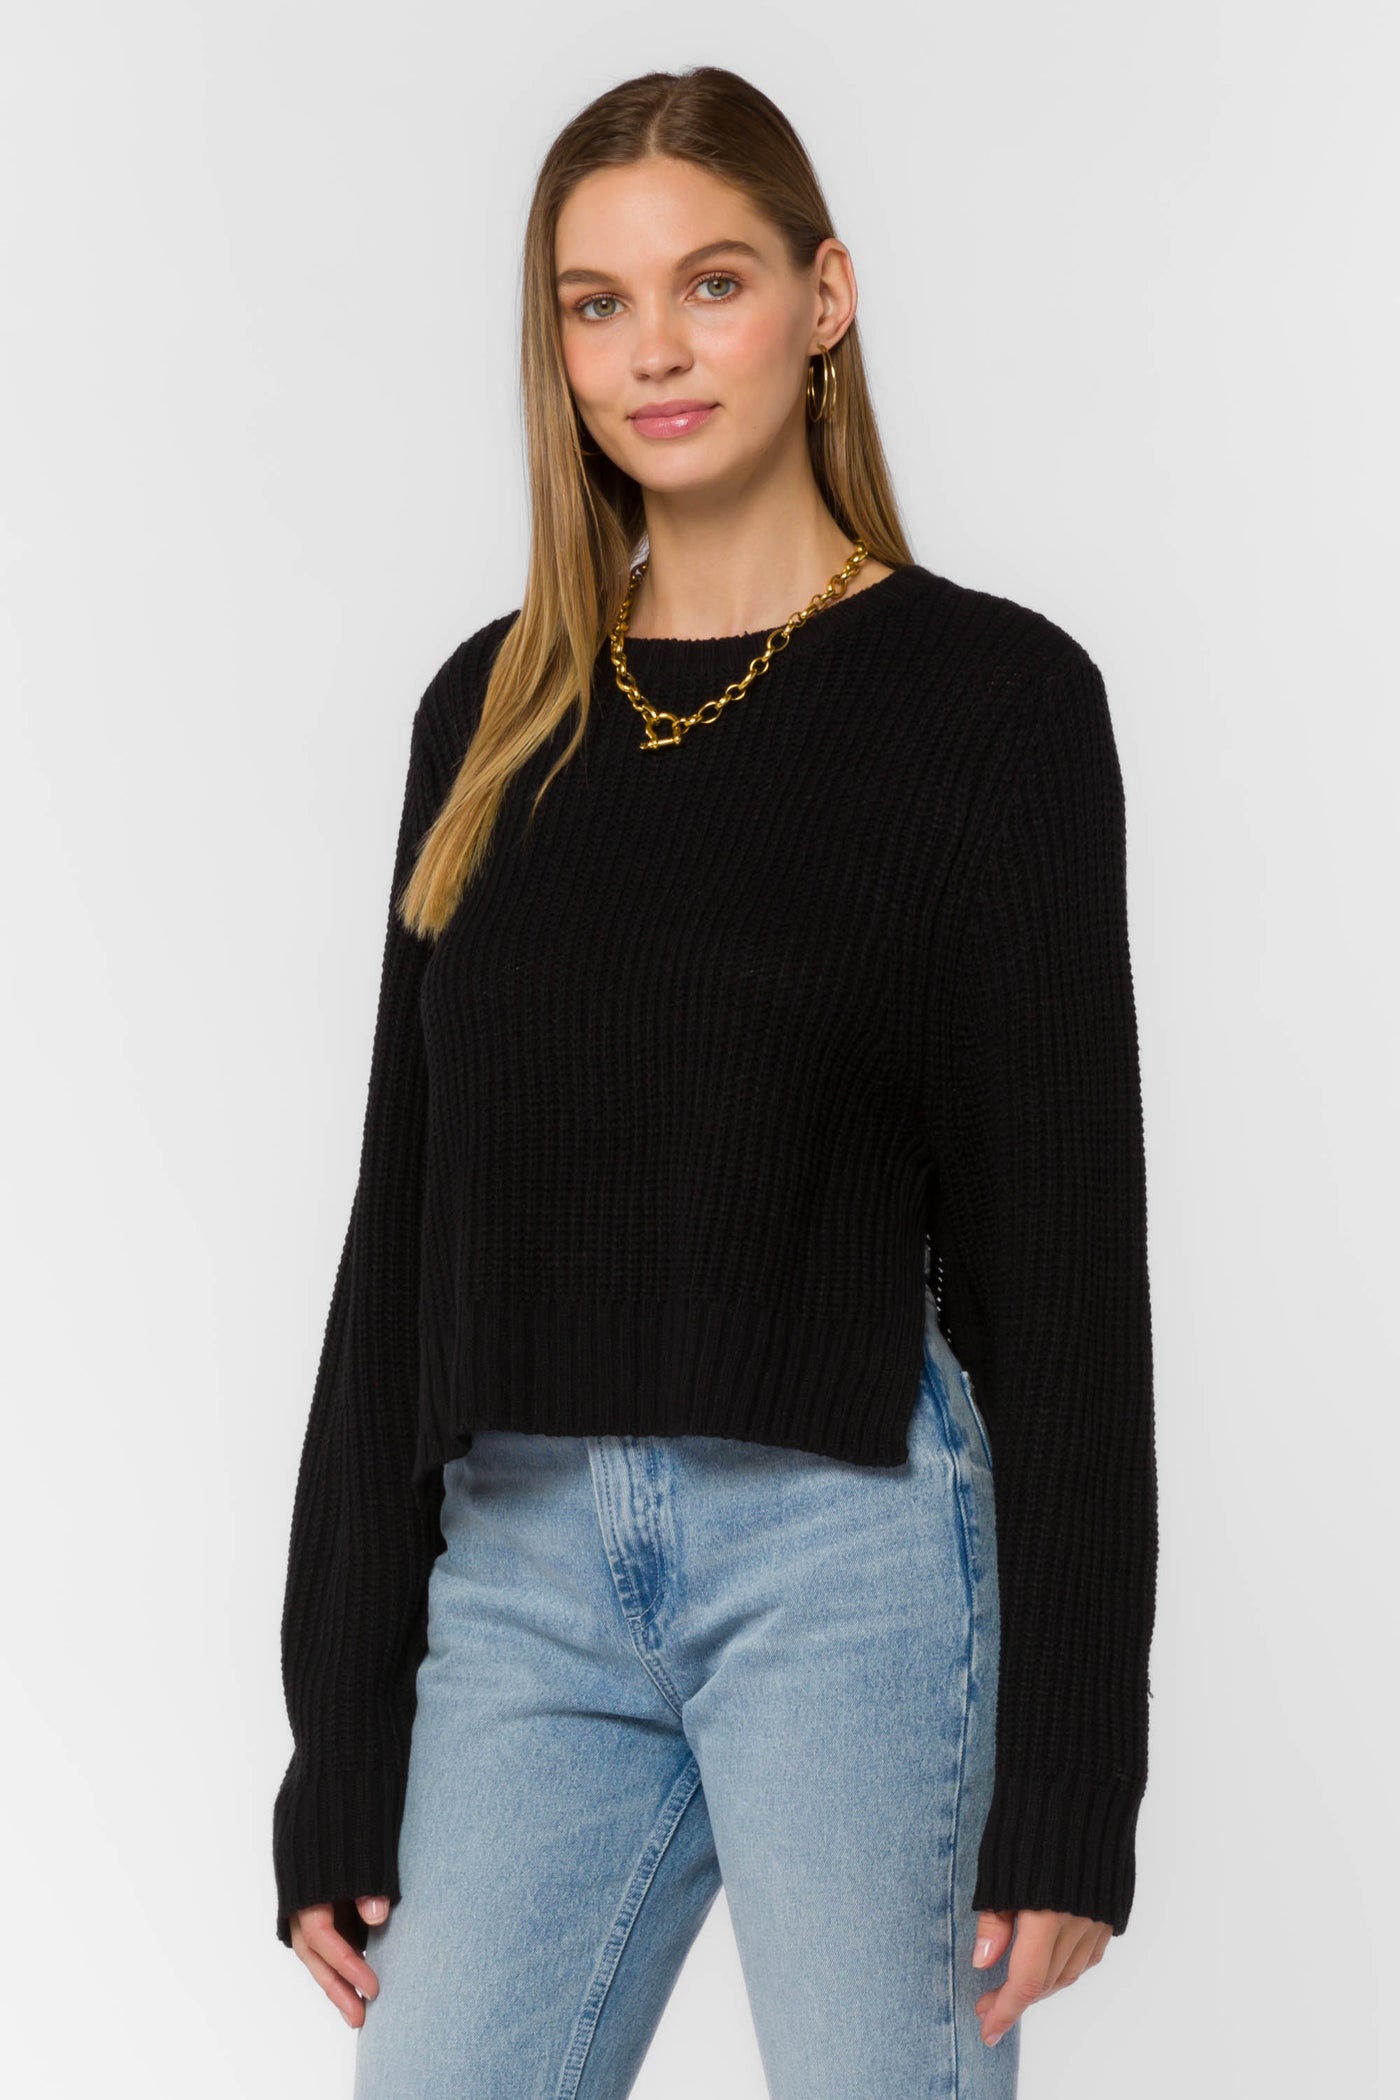 Korina Black Sweater - Sweaters - Velvet Heart Clothing